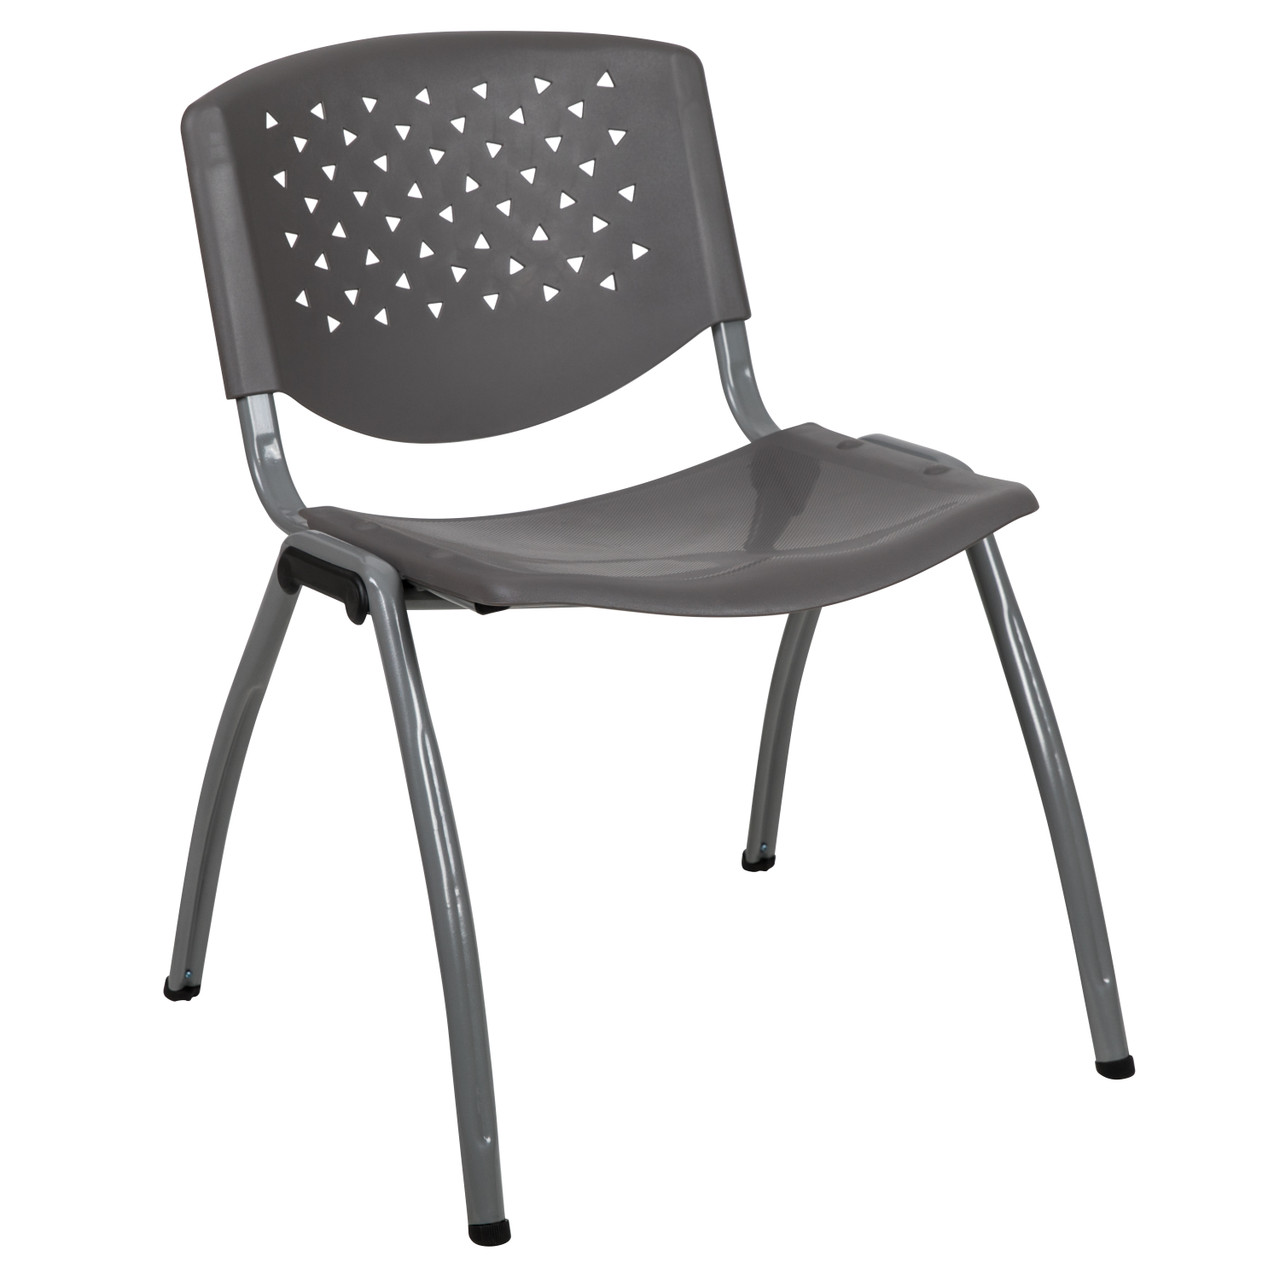 Flash Furniture HERCULES Series 880 lb. Capacity Gray Plastic Stack Chair w/ Titanium Gray Powder Coated Frame, Model# RUT-F01A-GY-GG